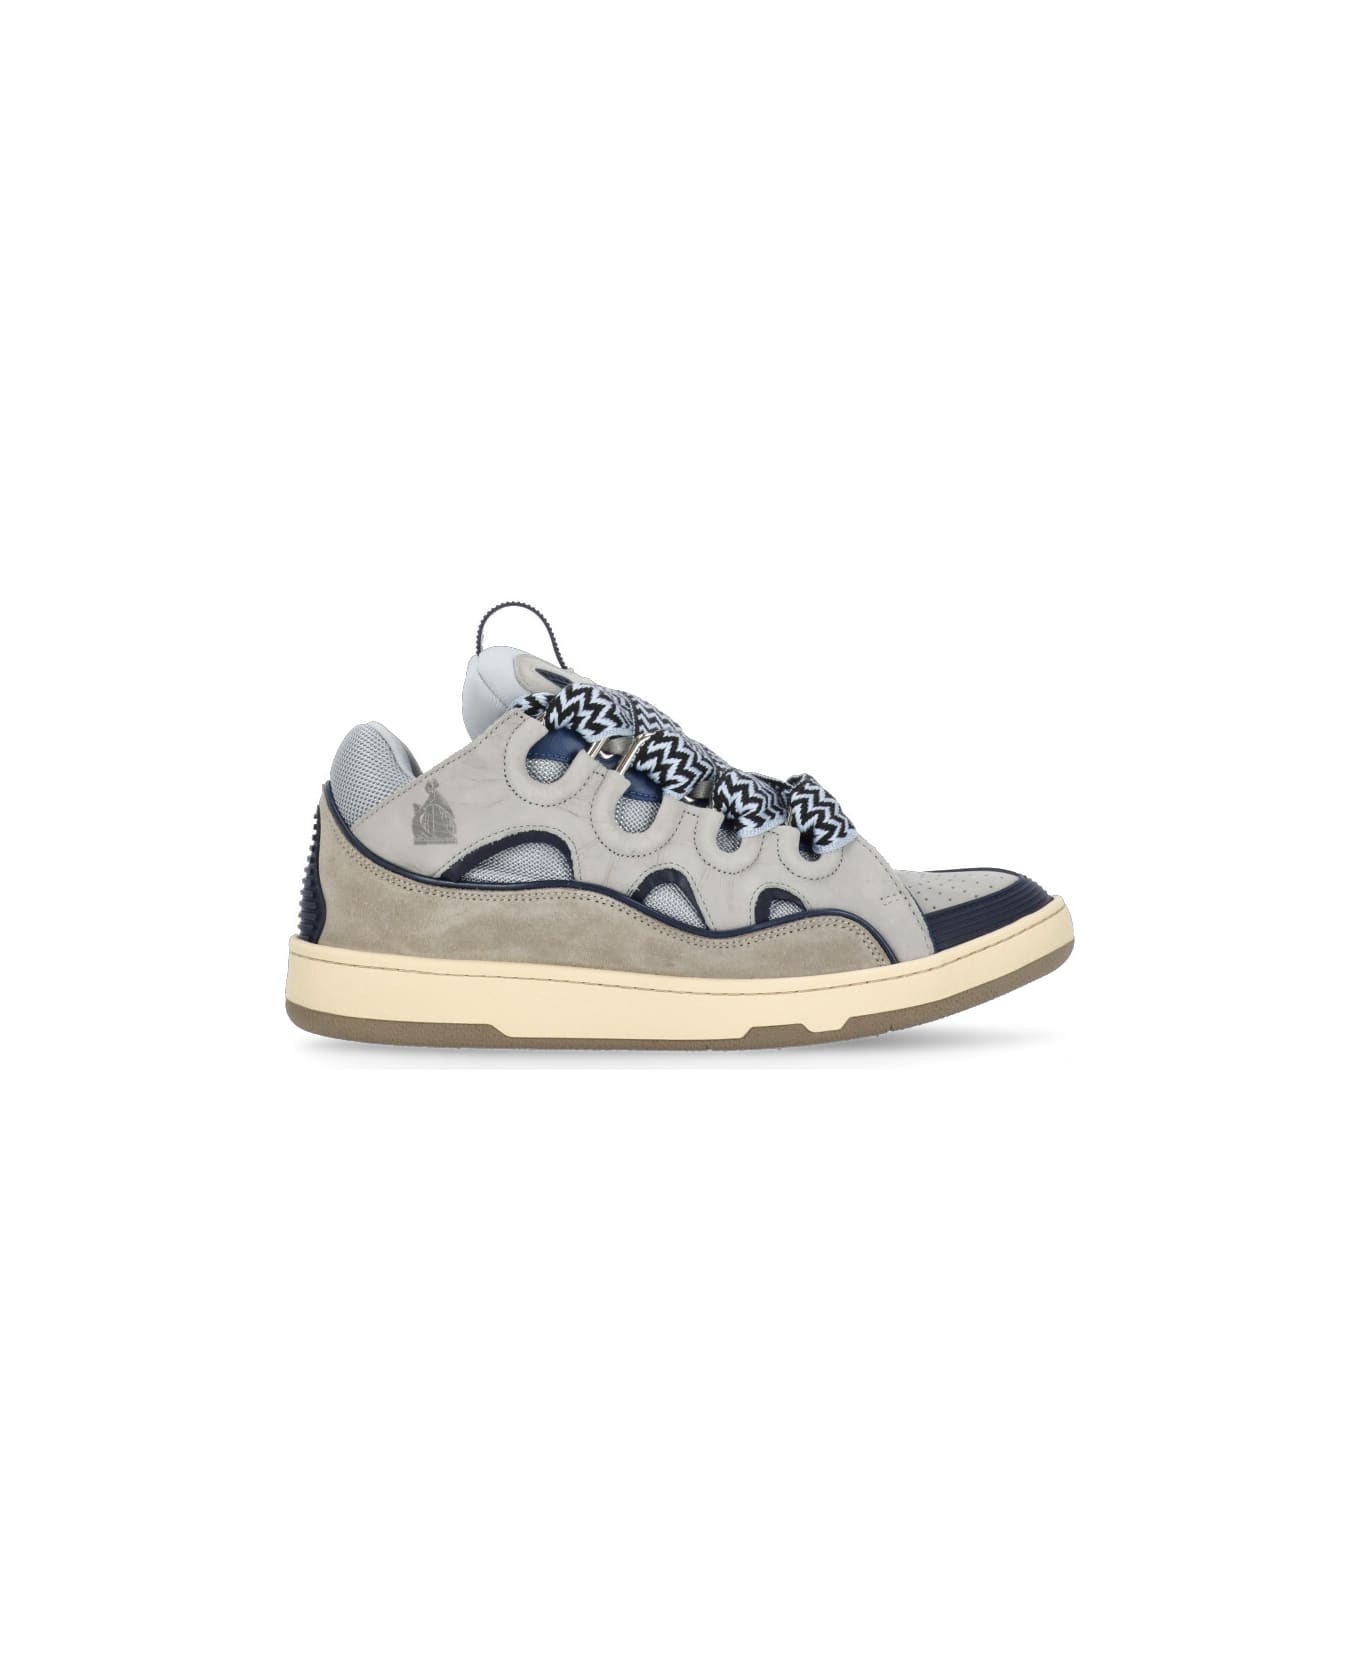 Lanvin 'curb' Sneakers In Grey Leather - Beige